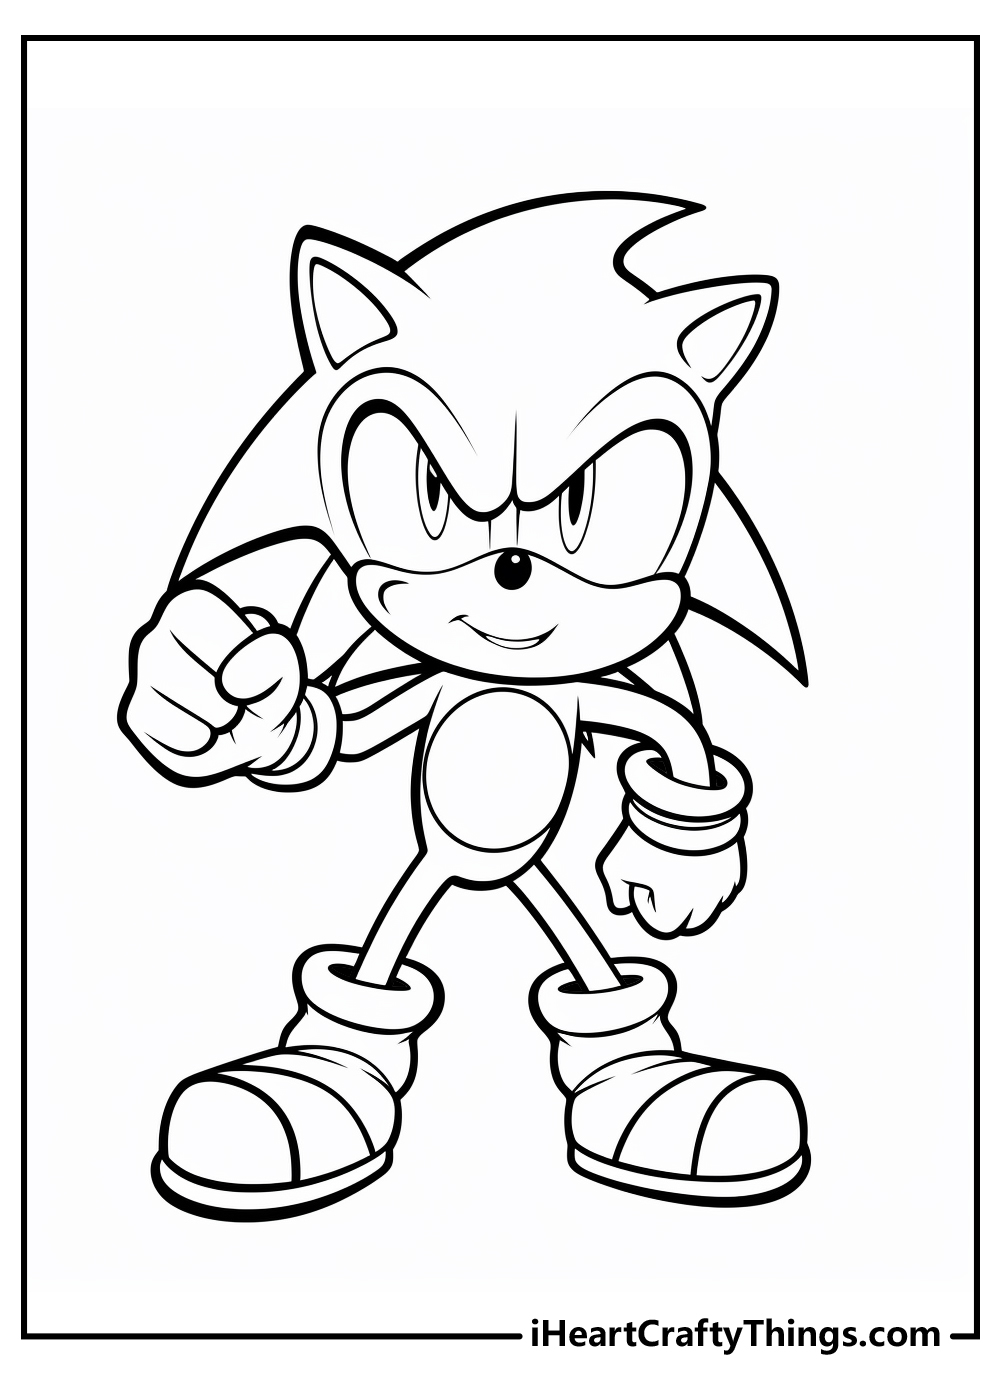  Innovative Designs Sonic the Hedgehog Kids Coloring